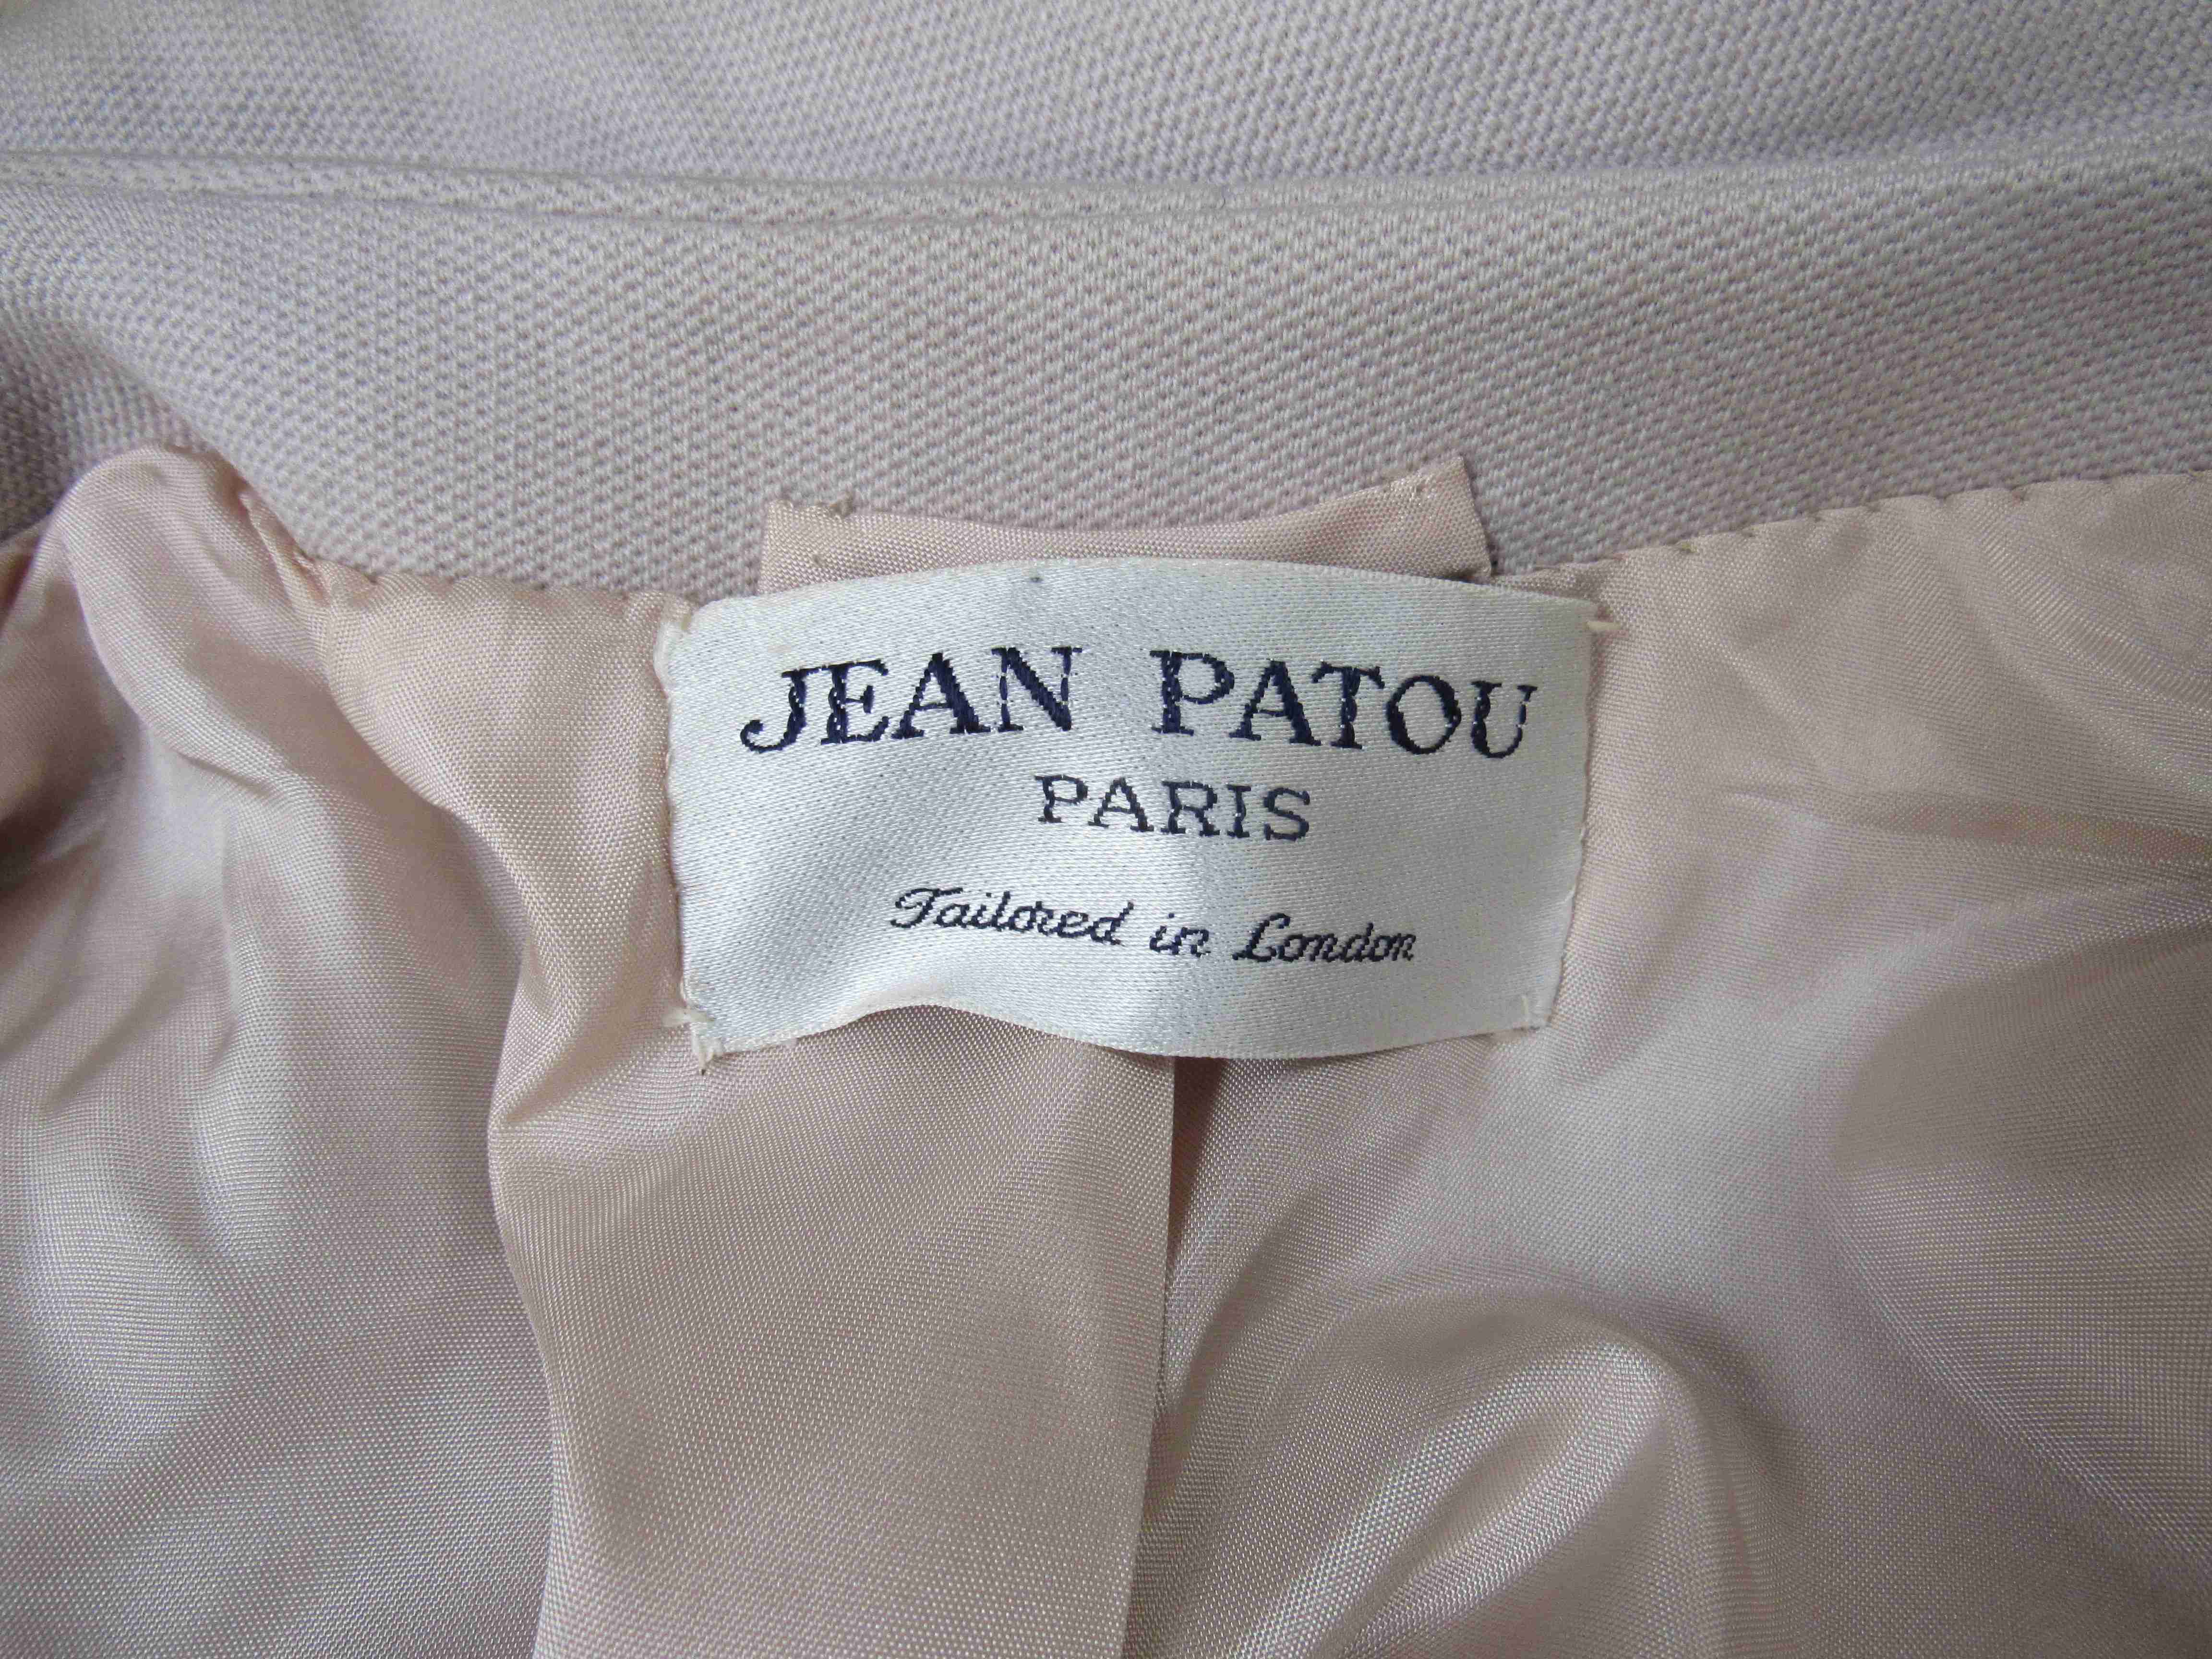 Jean Patou Paris classic light beige wool two piece dress and jacket suit, - Image 3 of 10